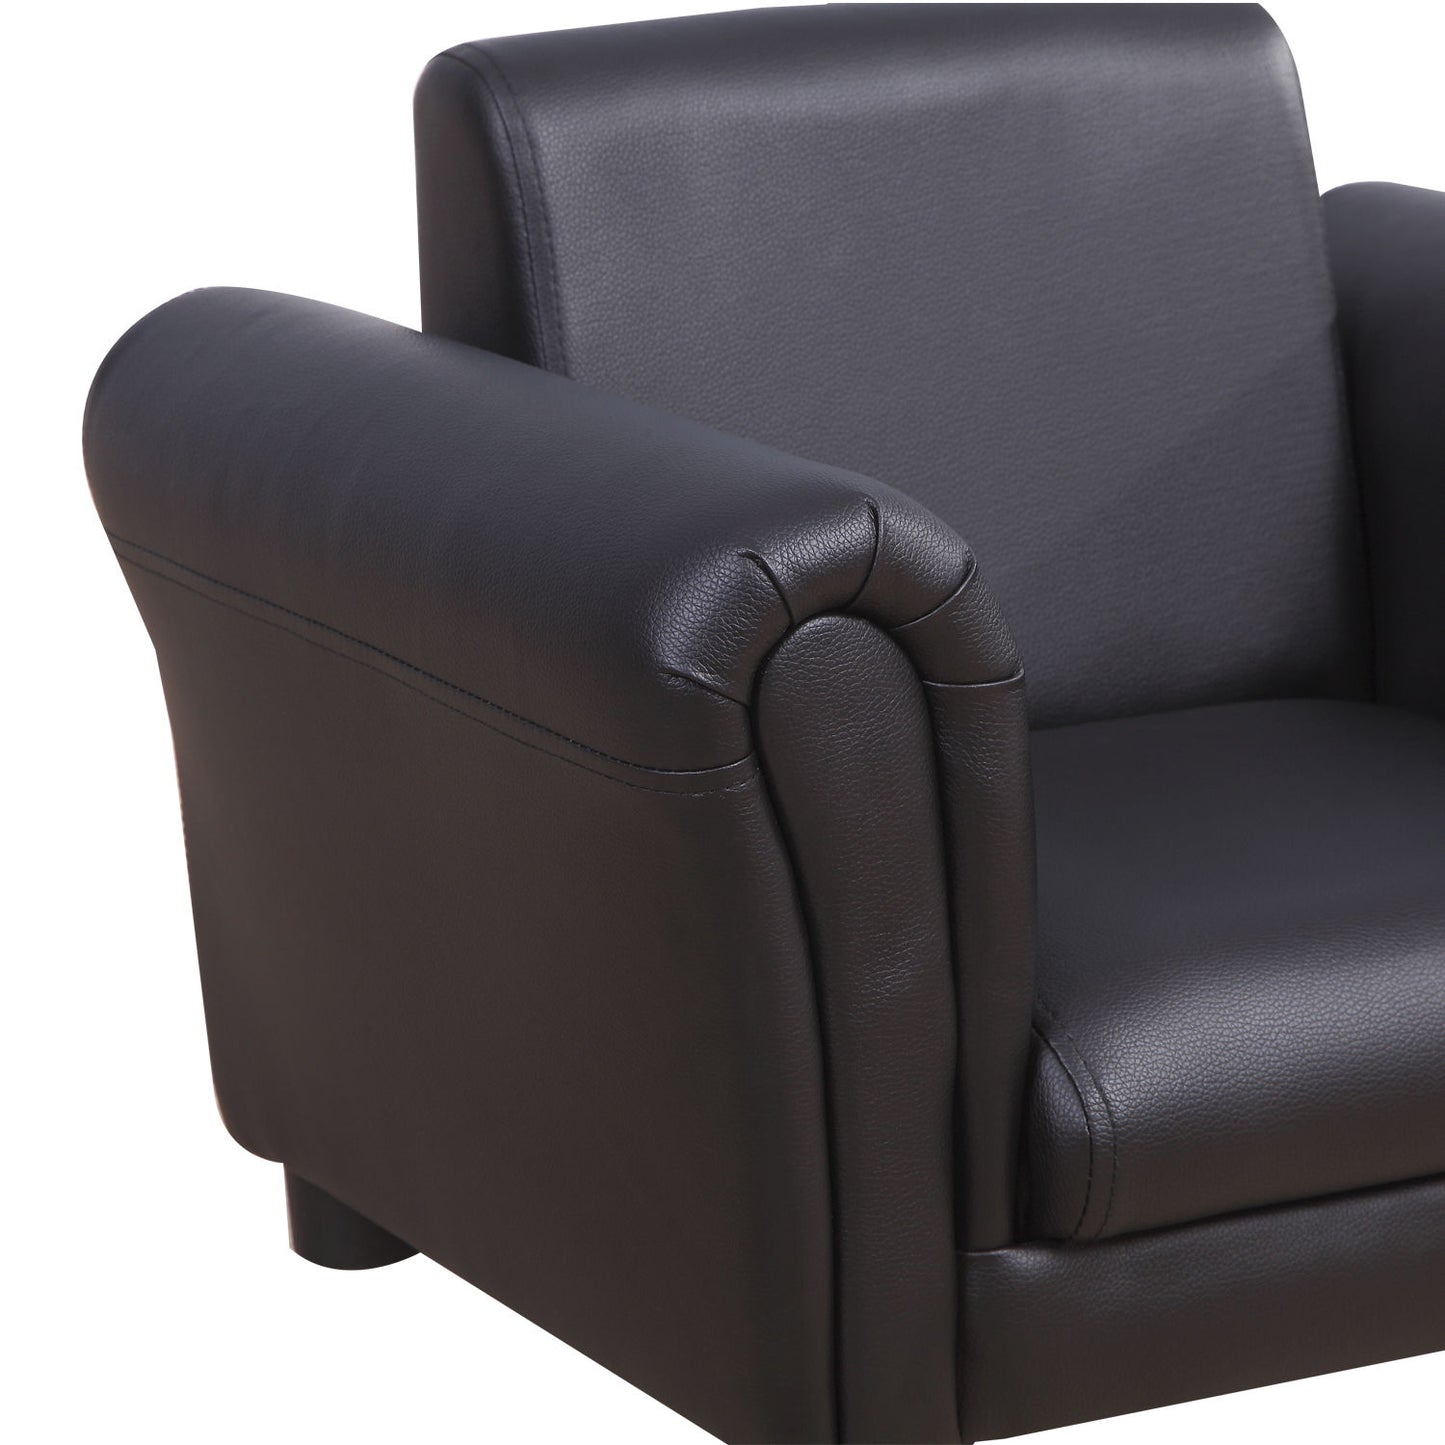 HOMCOM Children's PVC Single Seater Armchair with Footstool Black